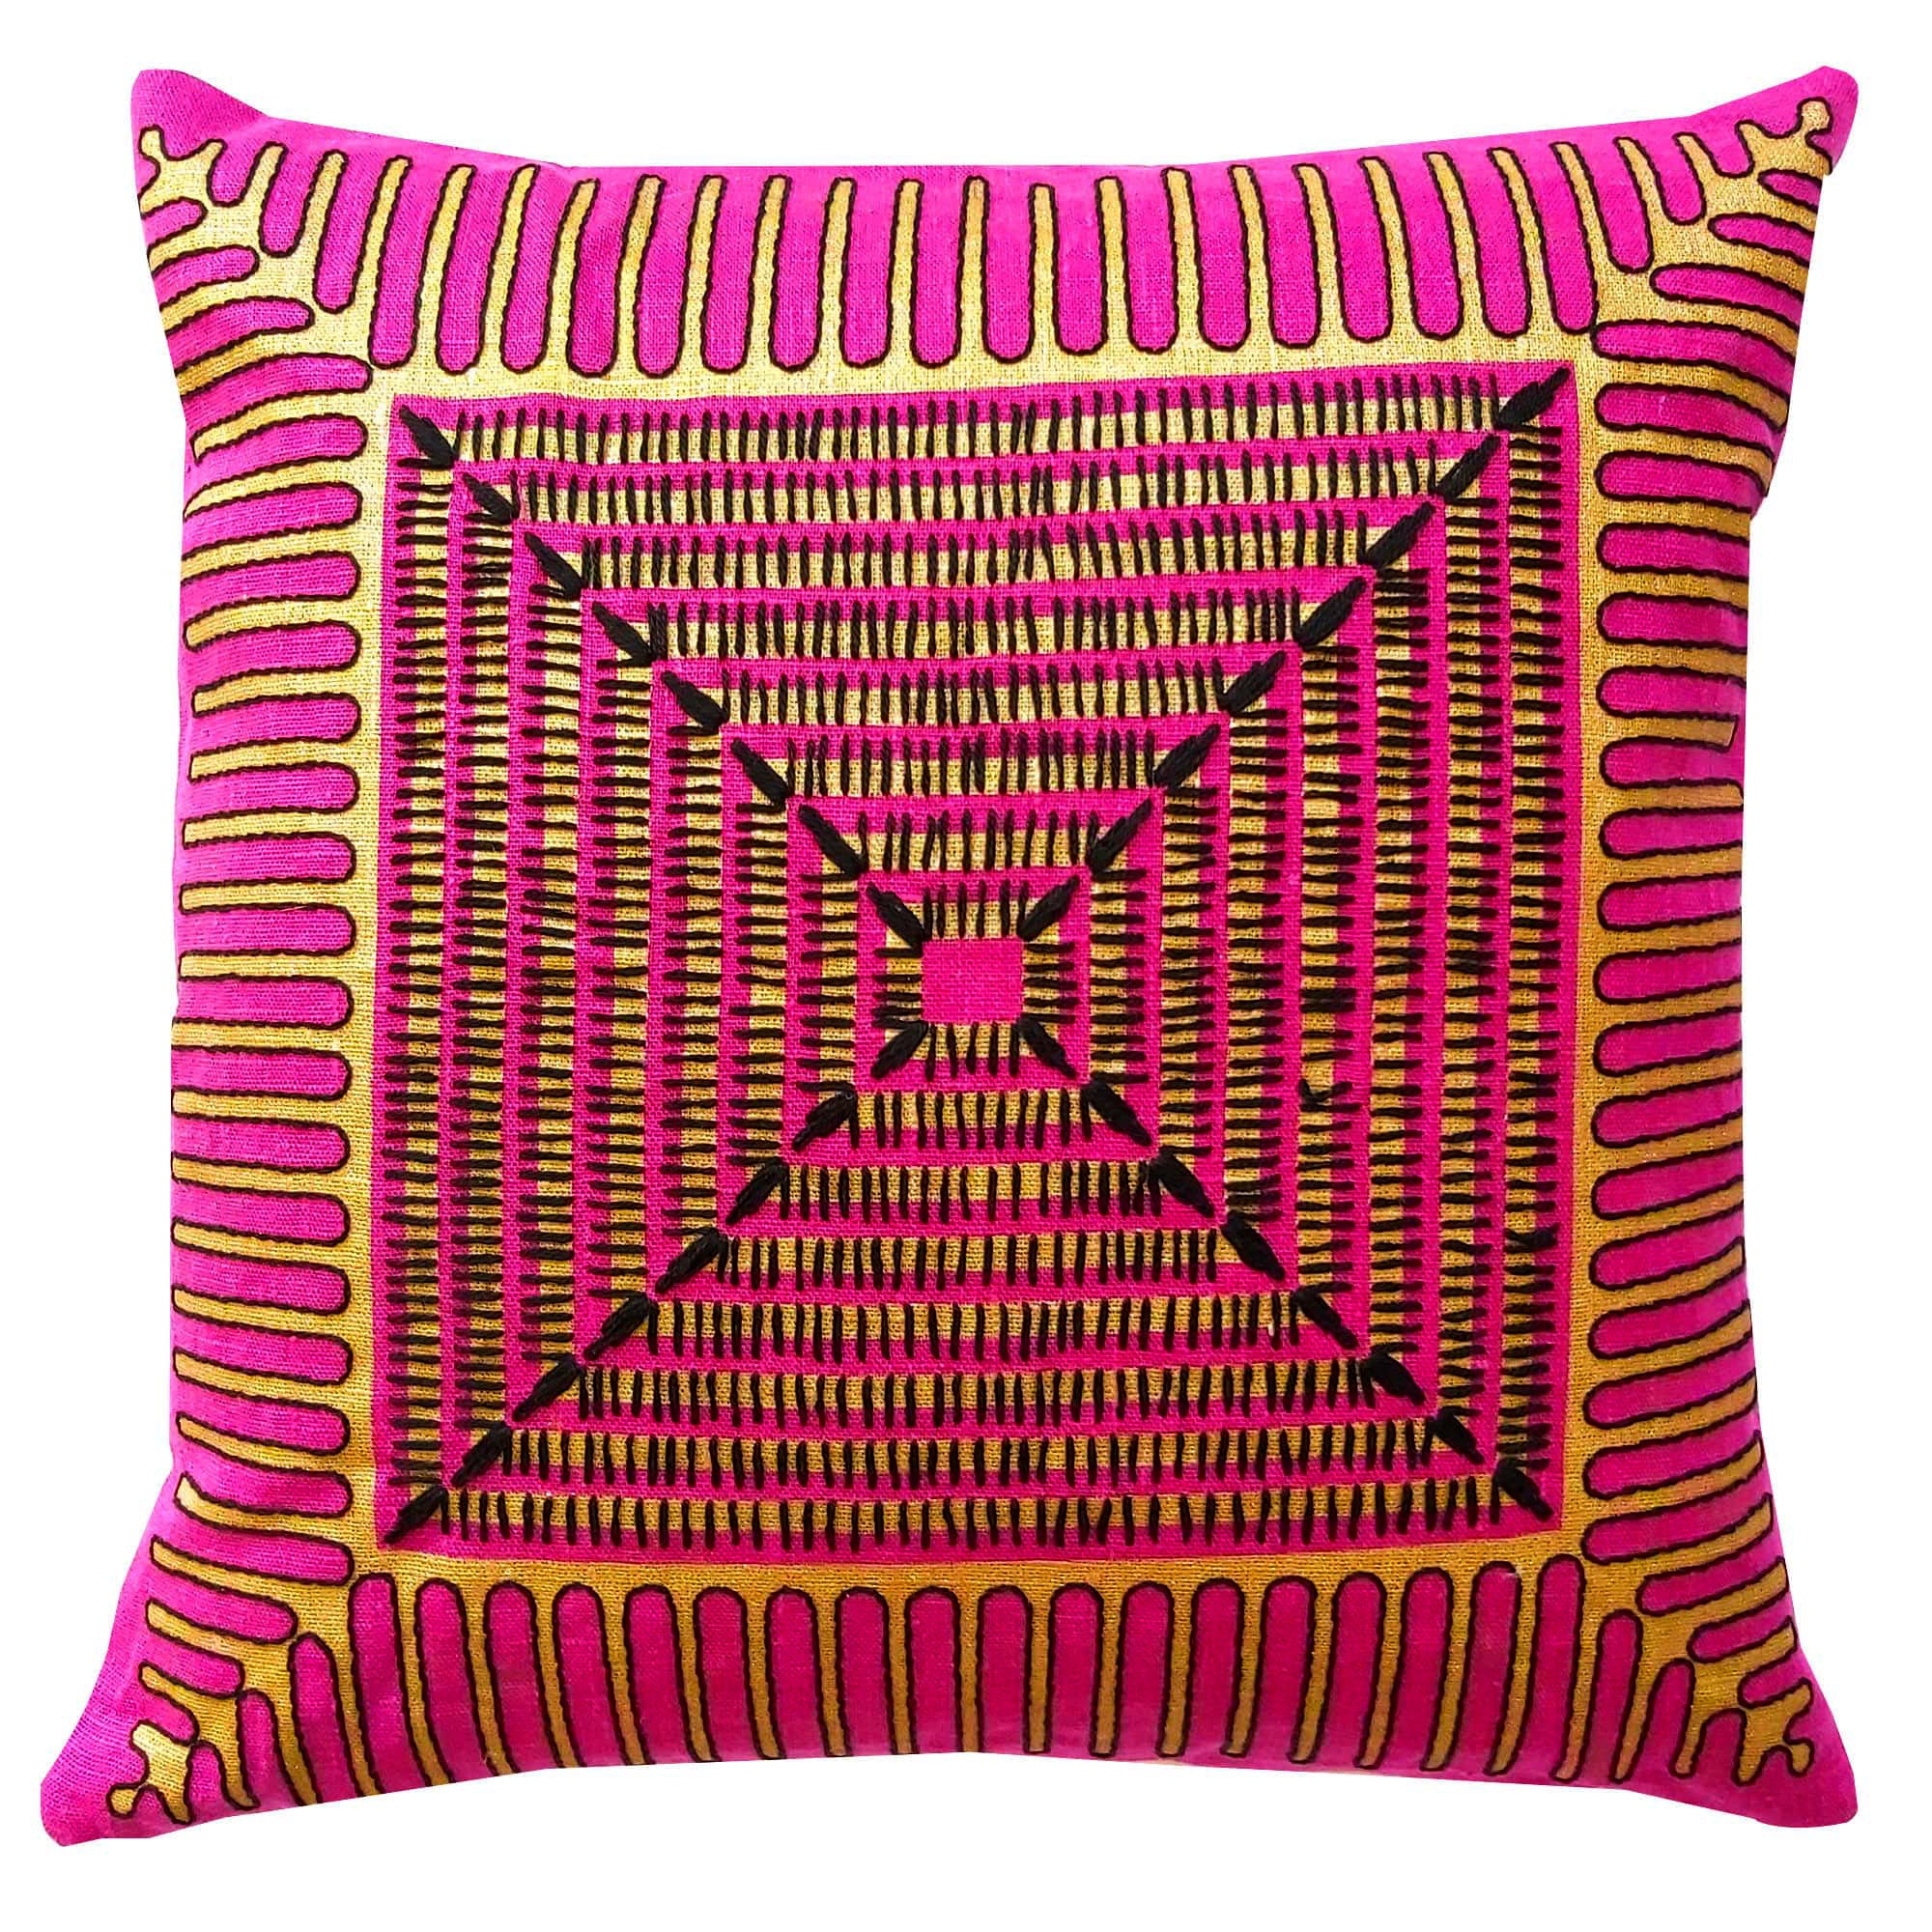 Hand-Embroidered-Pyramid-Magenta-Cushion-2-min.jpg